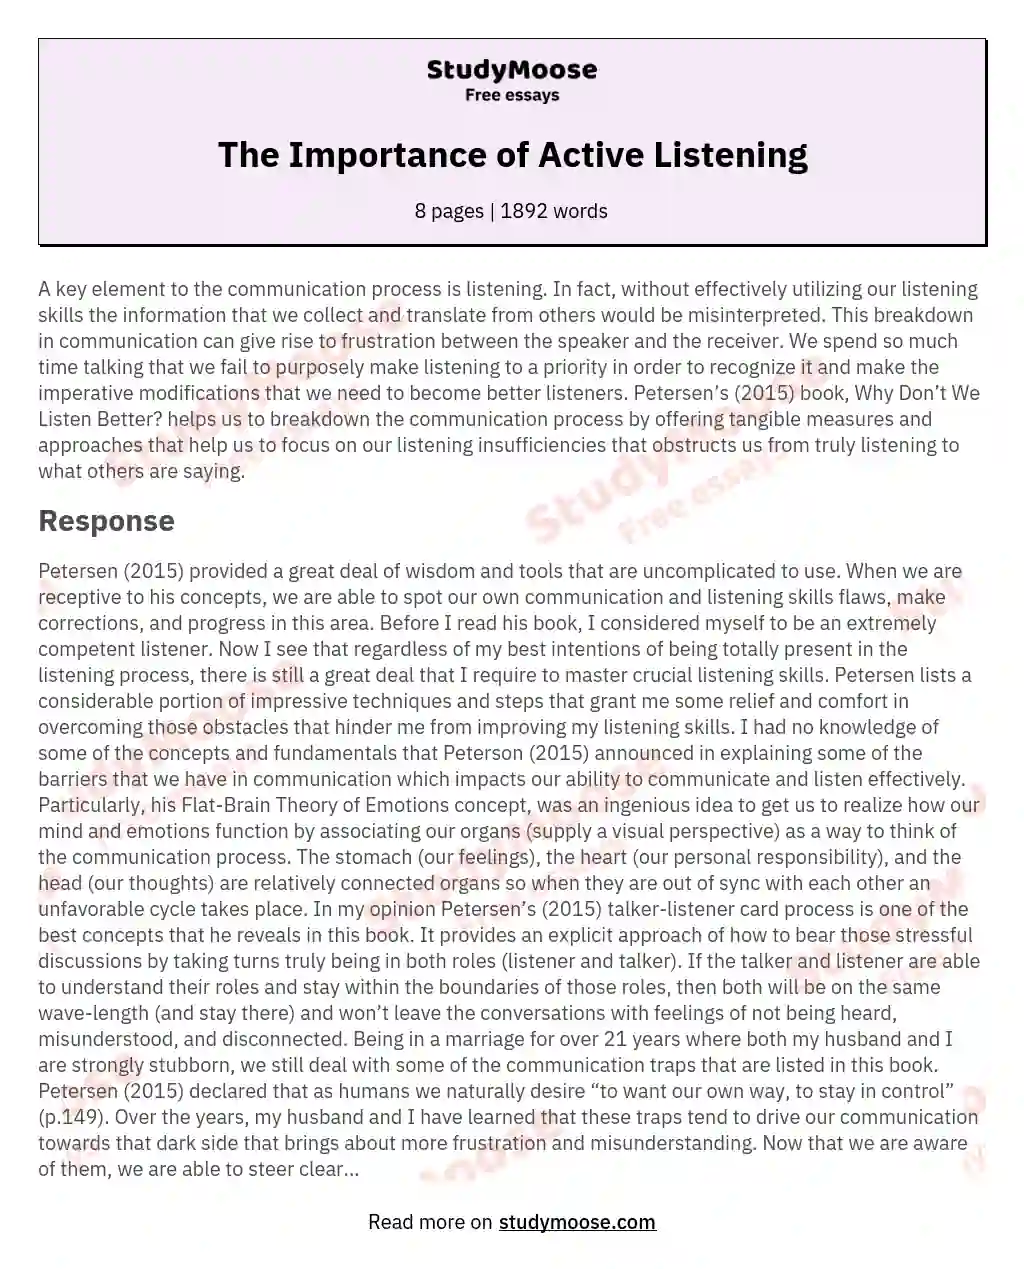 the power of listening essay